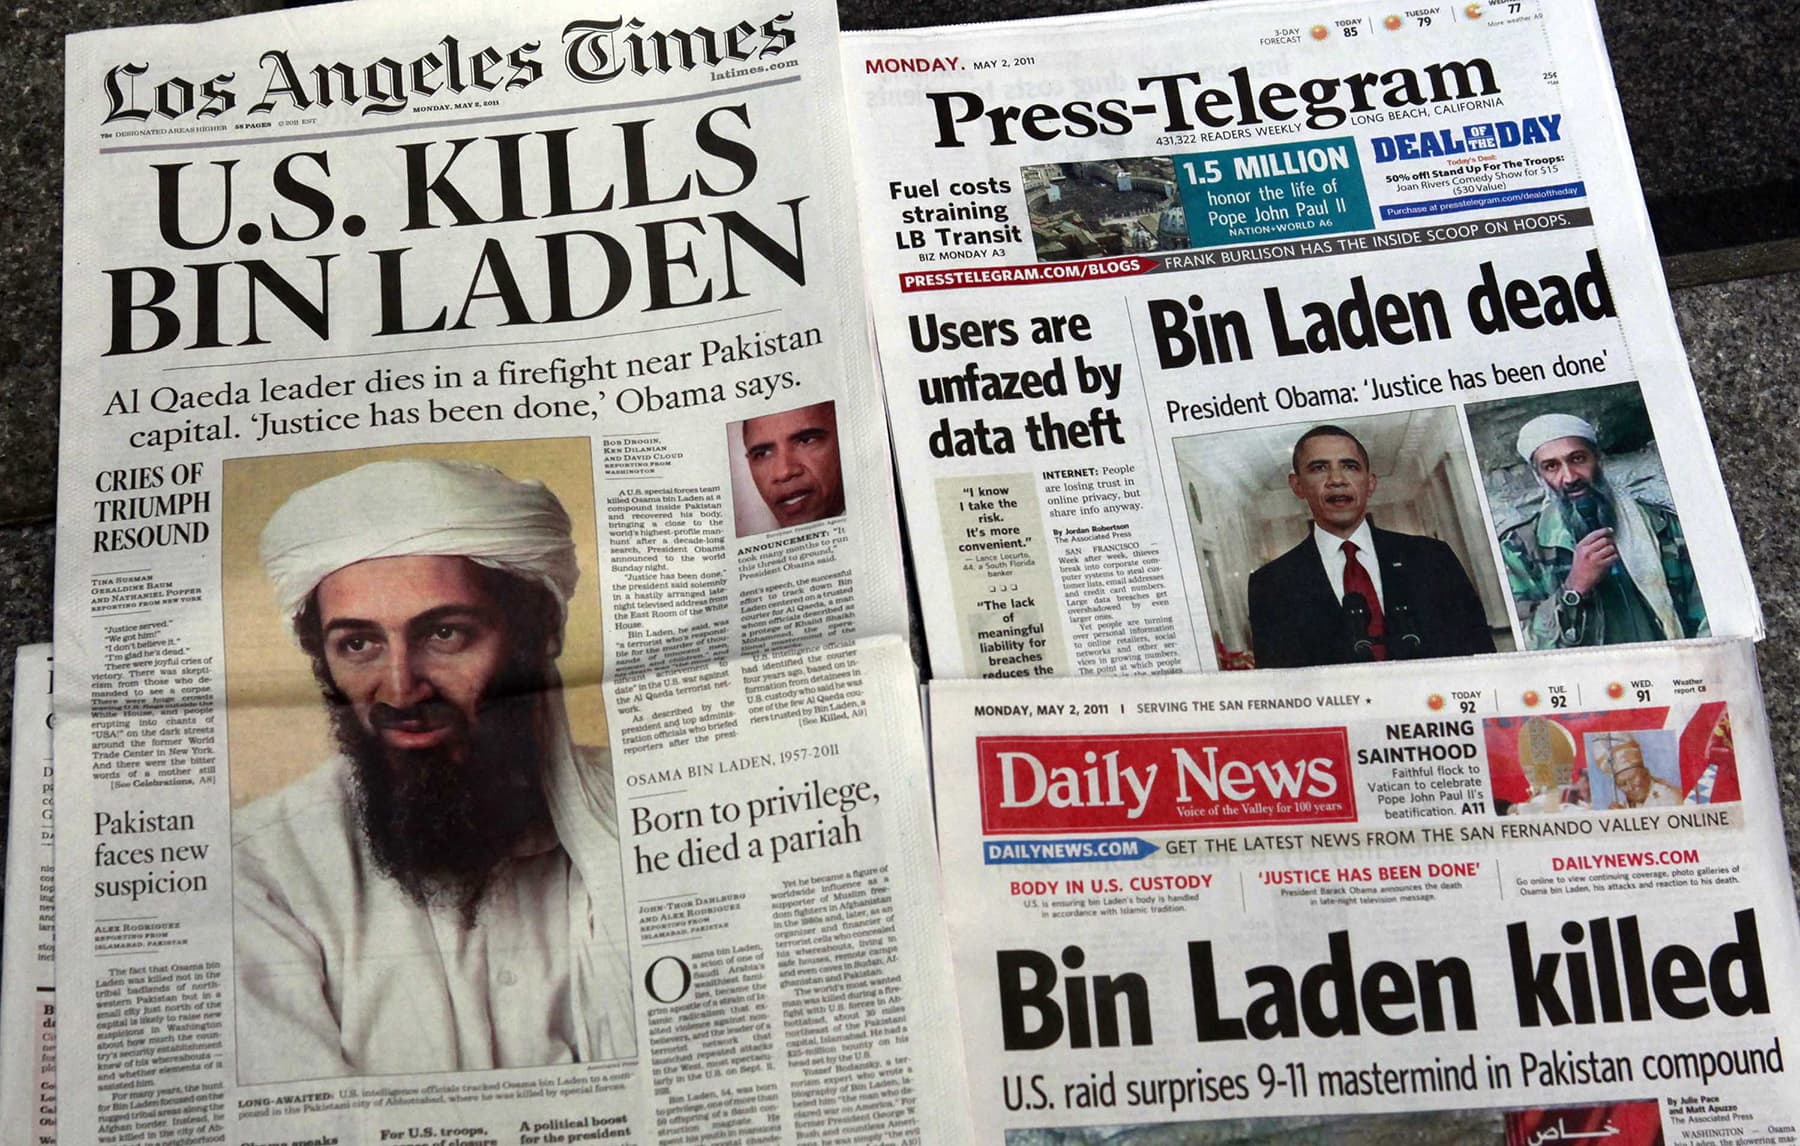 A Look At Al Qaeda 10 Years After Osama Bin Laden's Death | Here & Now